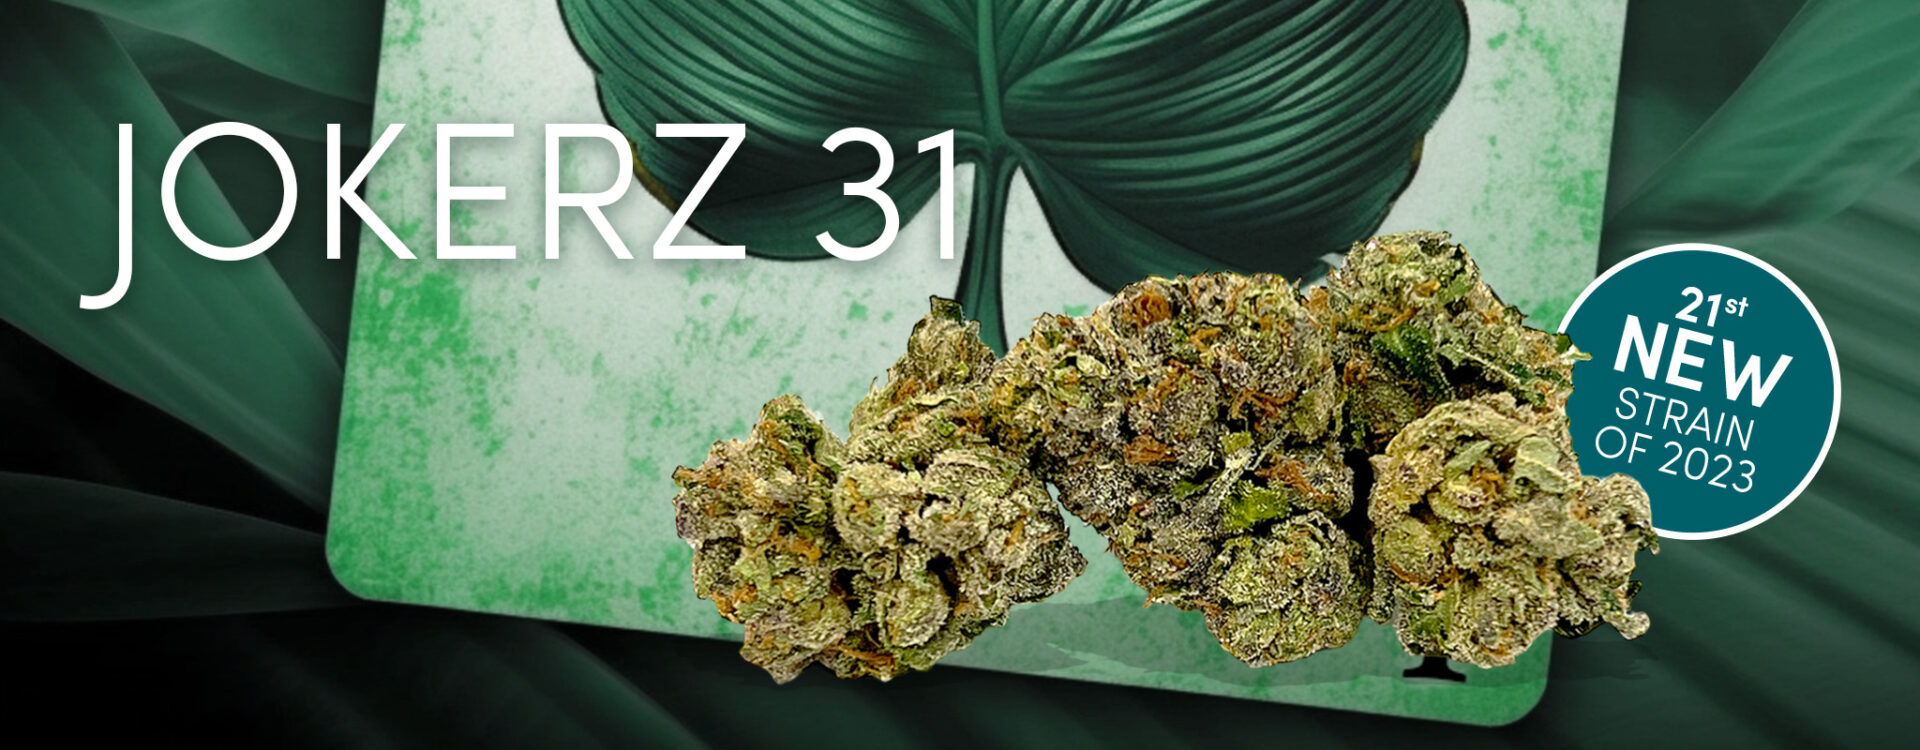 Jokerz 3 is a marijuana strain with a green leaf on it.